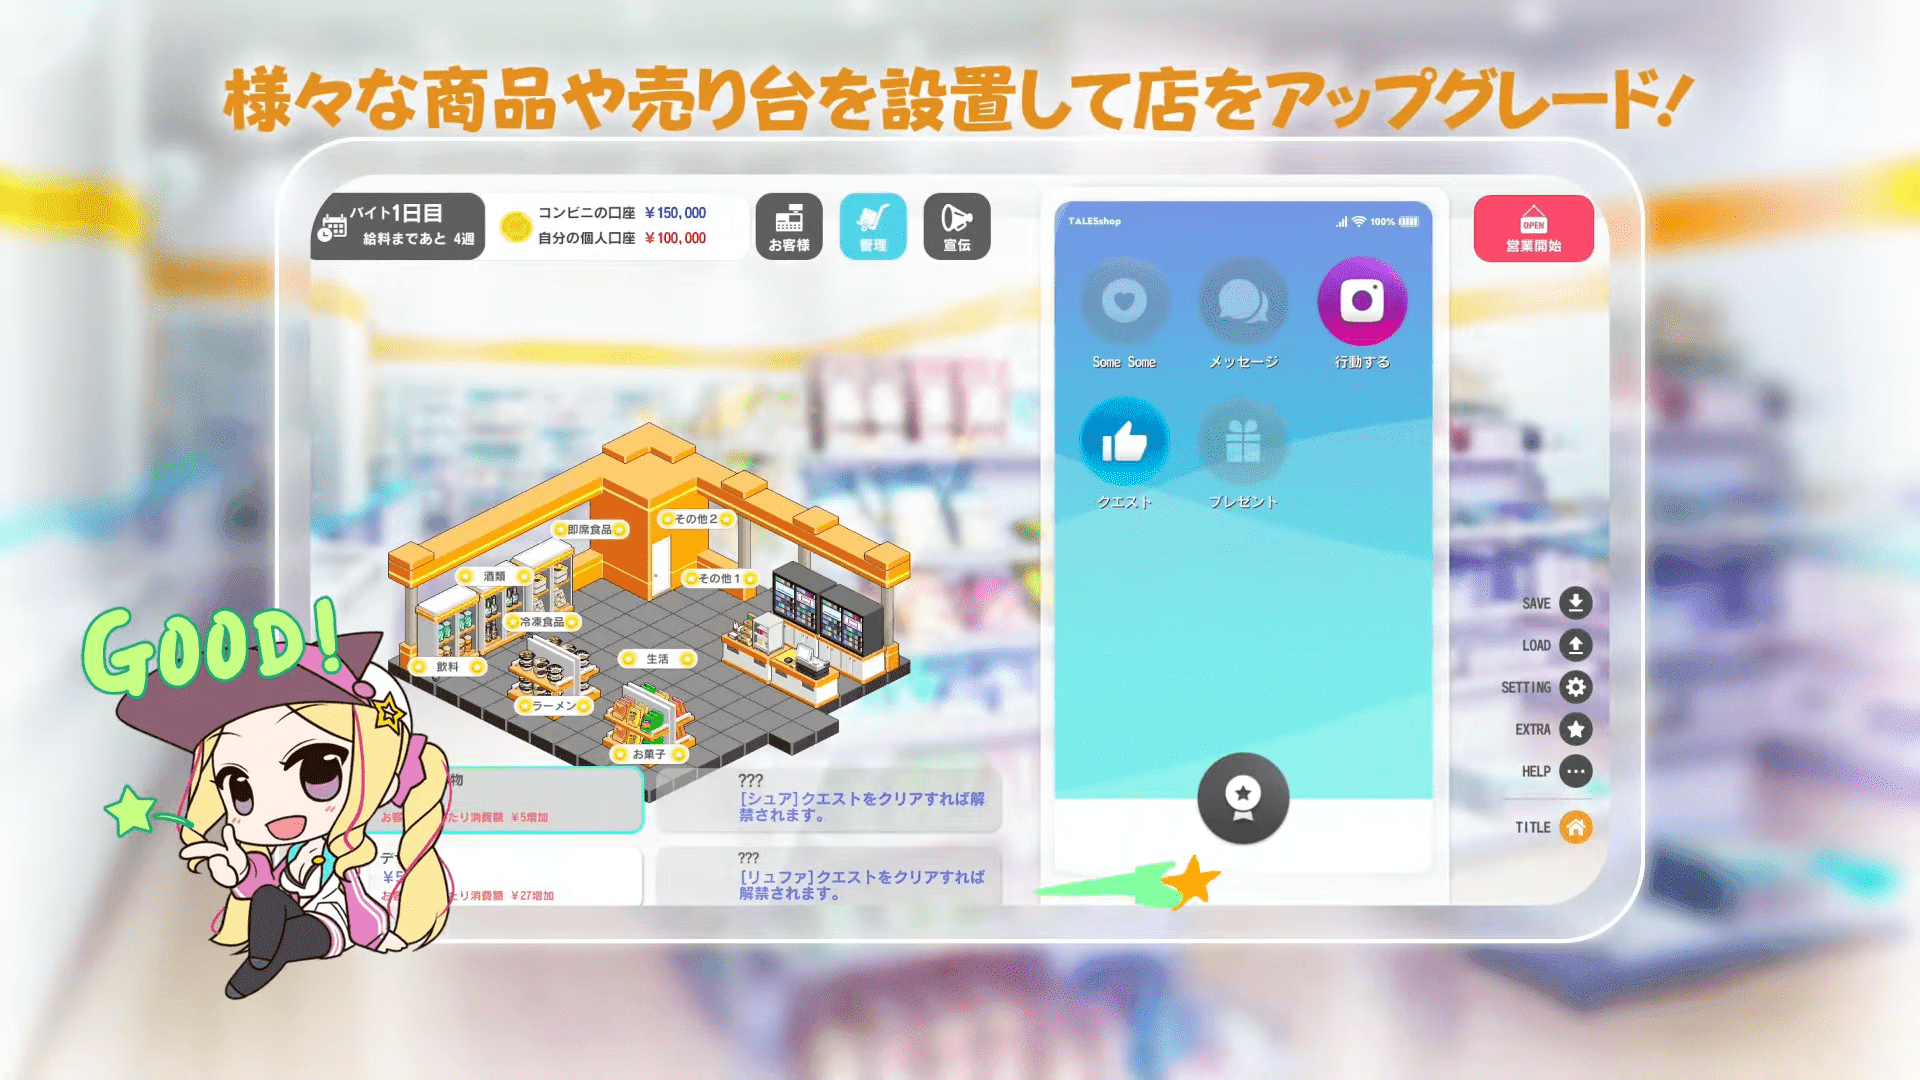 『SOME SOME コンビニエンスストア』の日本語版がNintendo Switchに向けて7月25日に発売決定_004